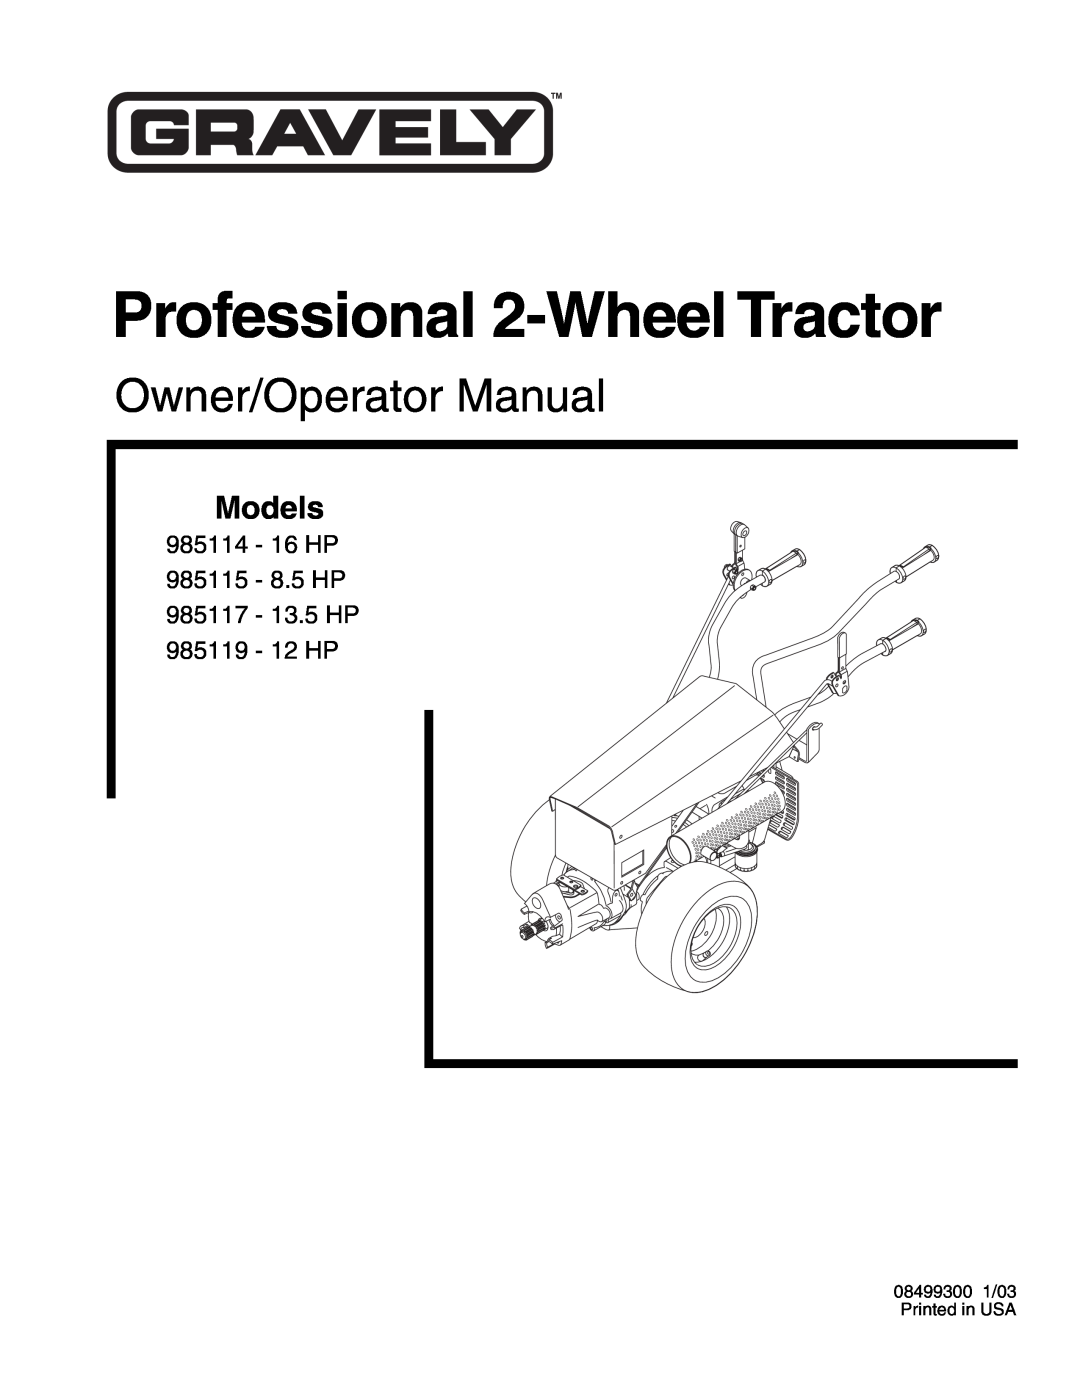 Ariens 985117, 985115, 985114 manual Models, Professional 2-WheelTractor, Owner/Operator Manual, 985119 - 12 HP 